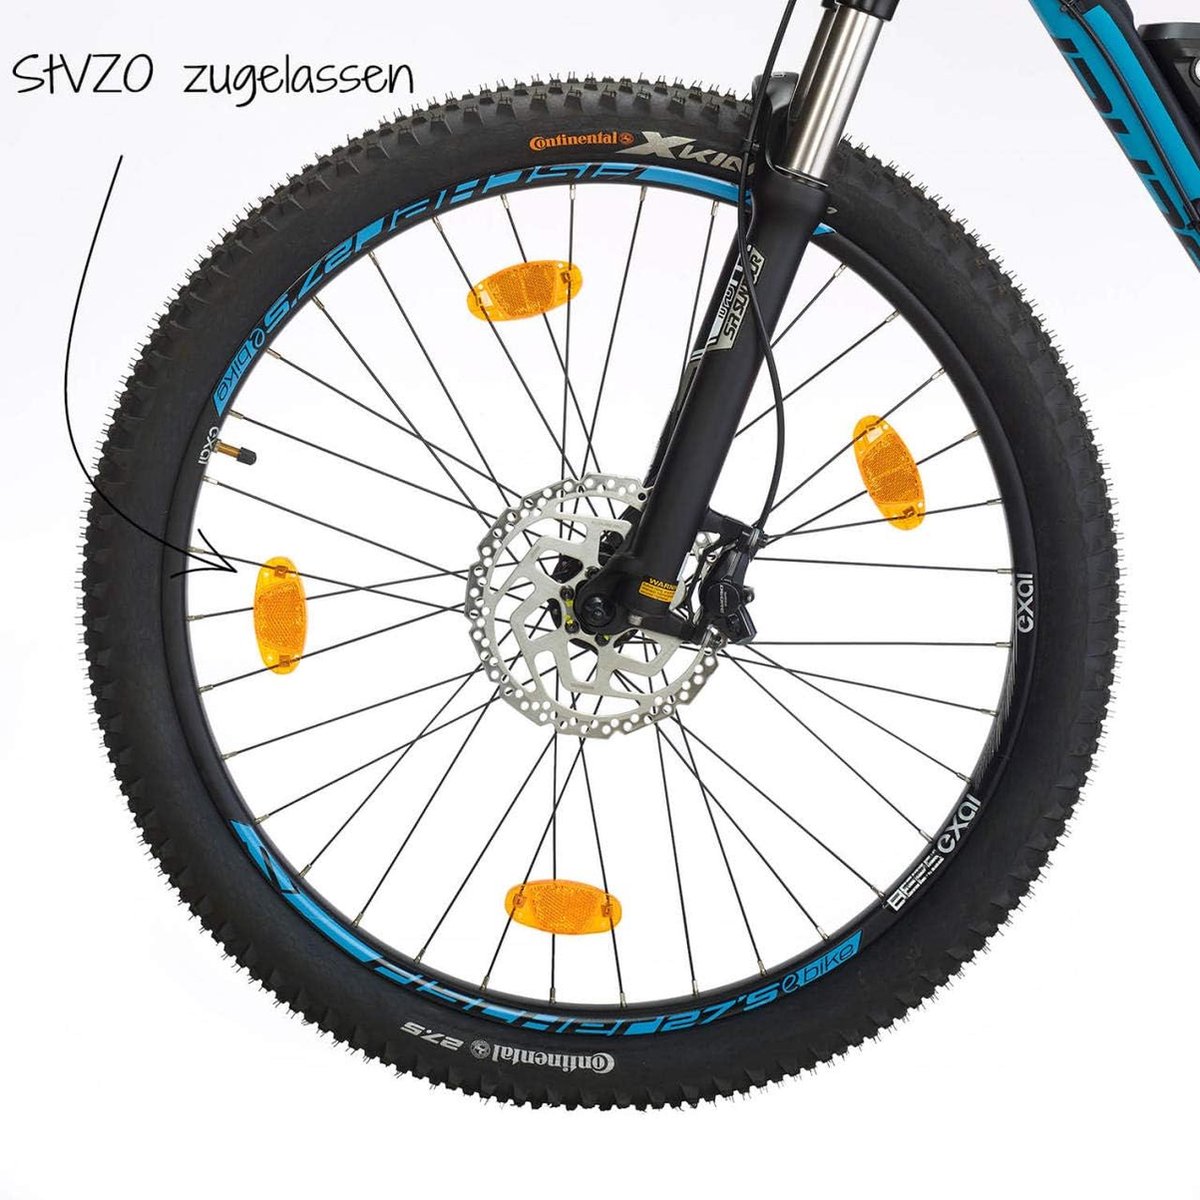 Rayons de vélo Rayons de vélo colorés Rayons Clicker Réflecteurs d